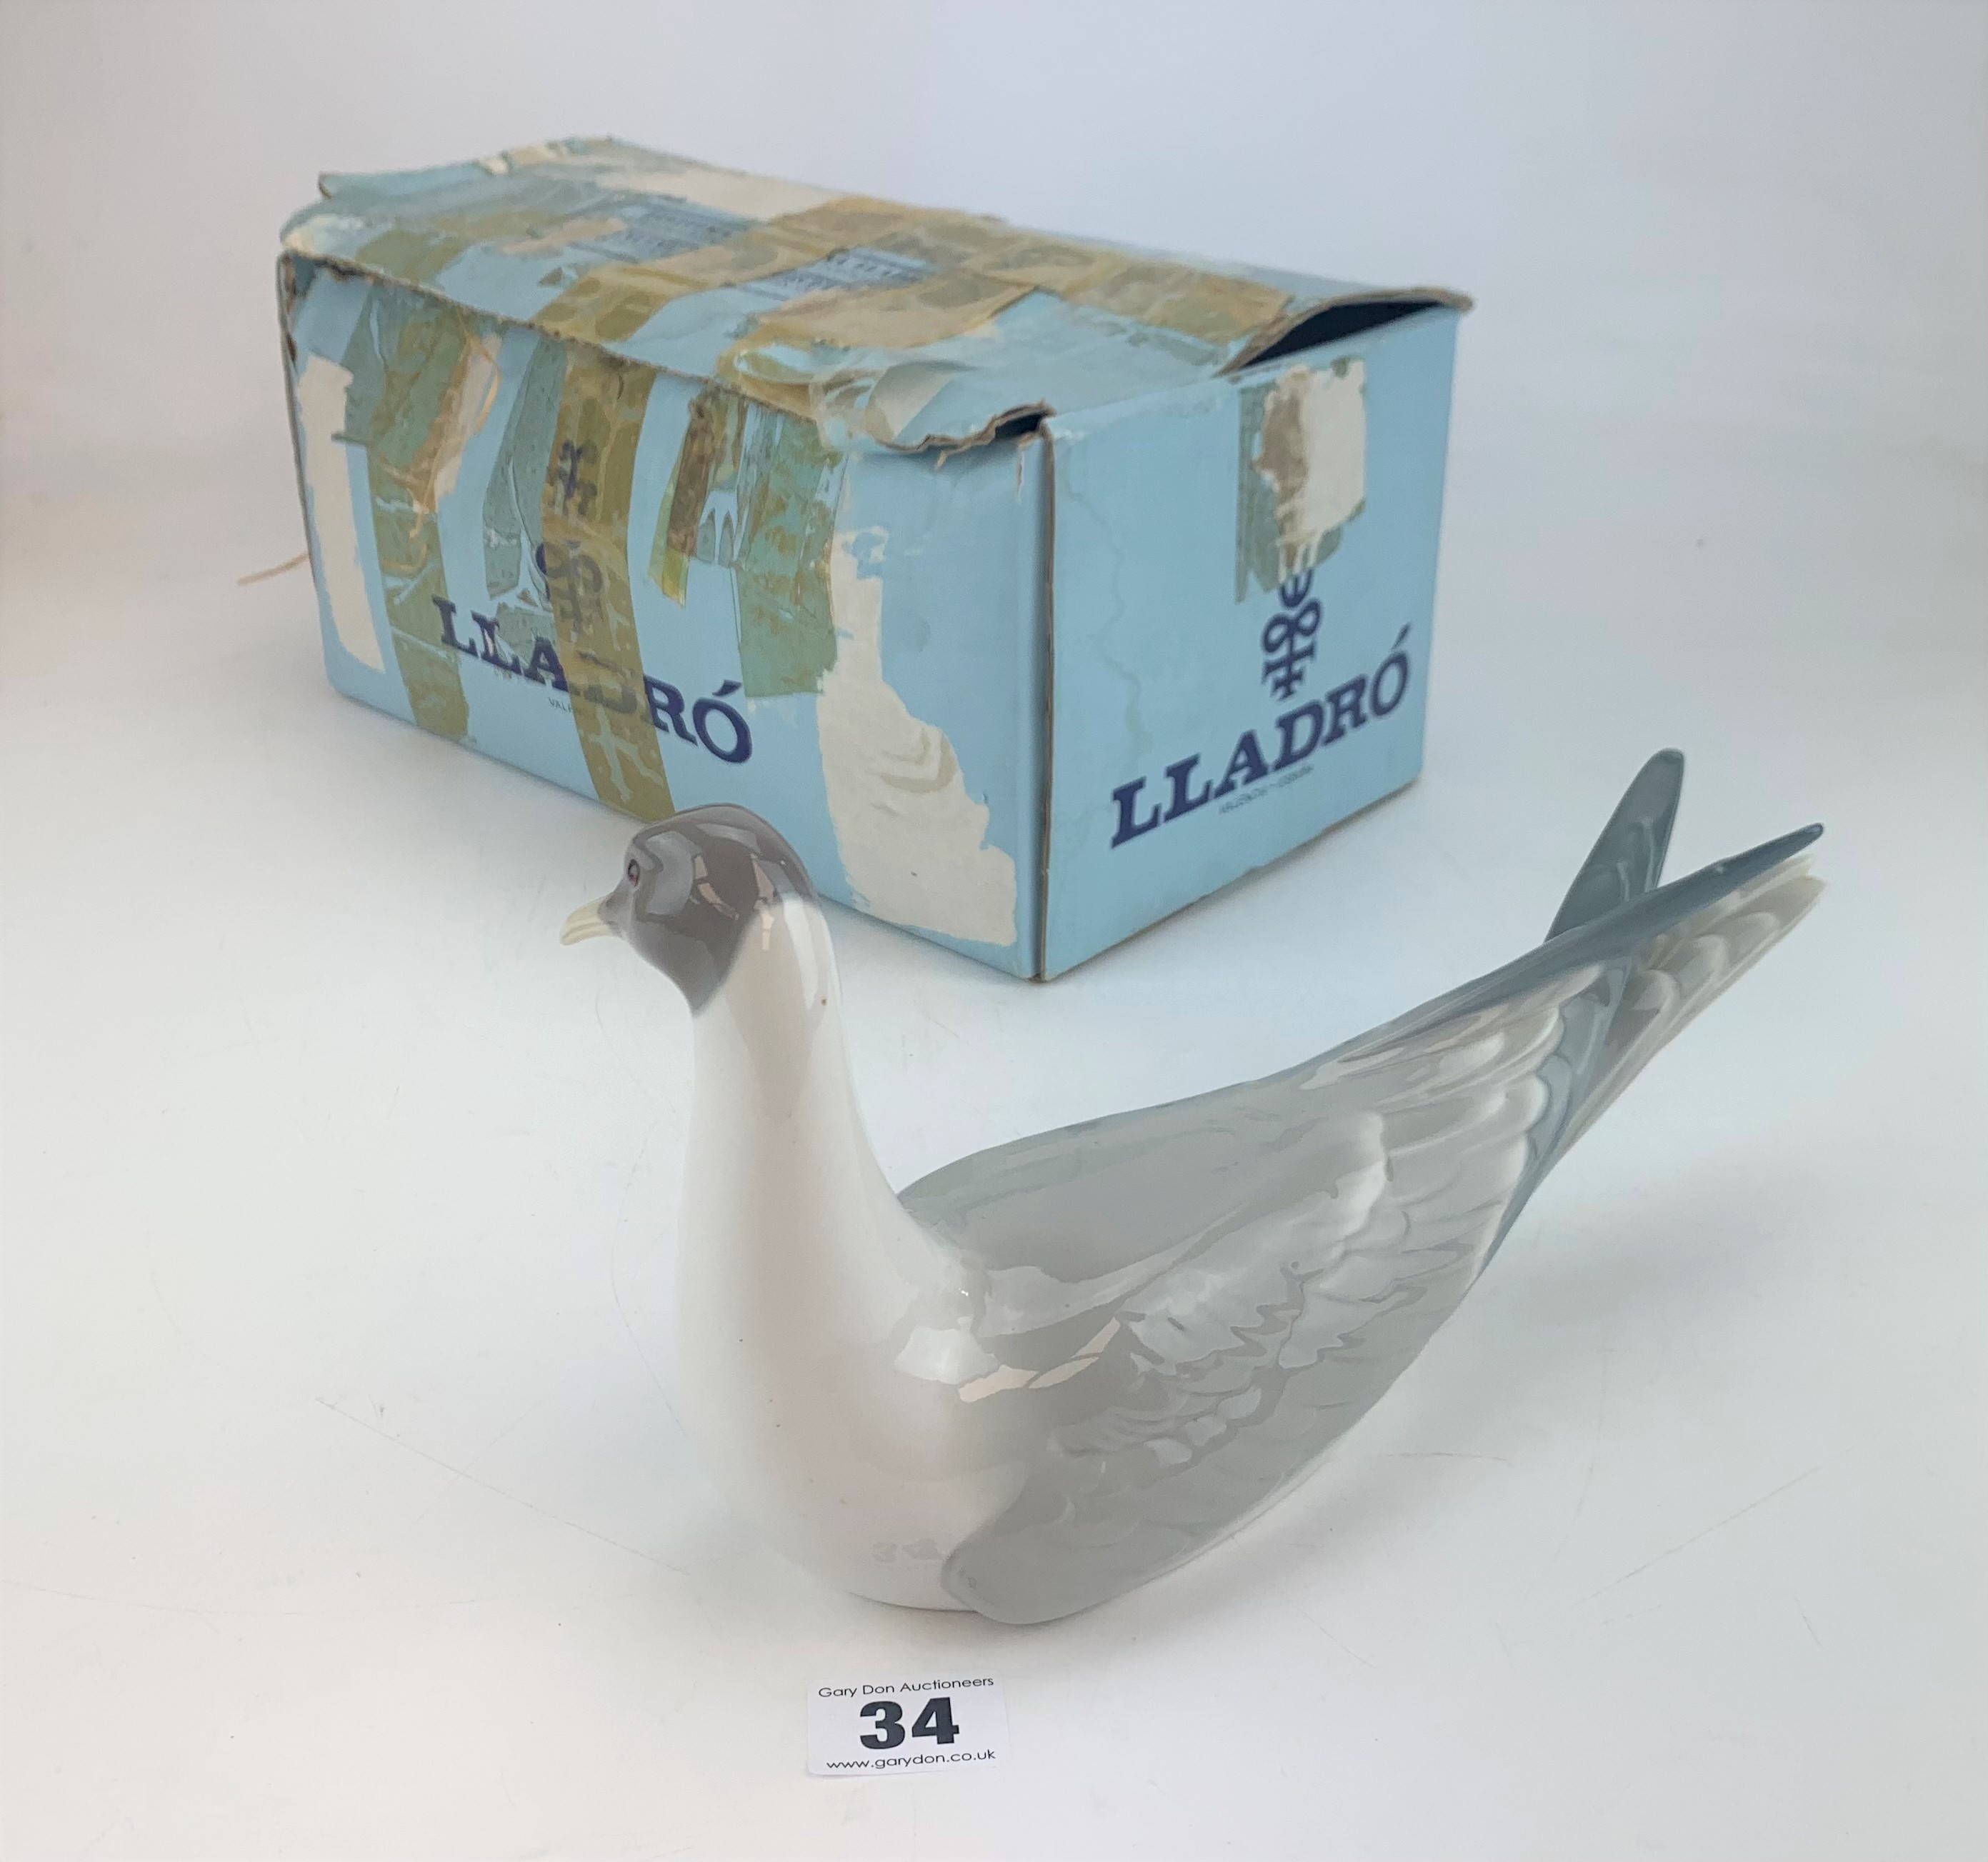 Lladro bird figure in box - Image 2 of 4